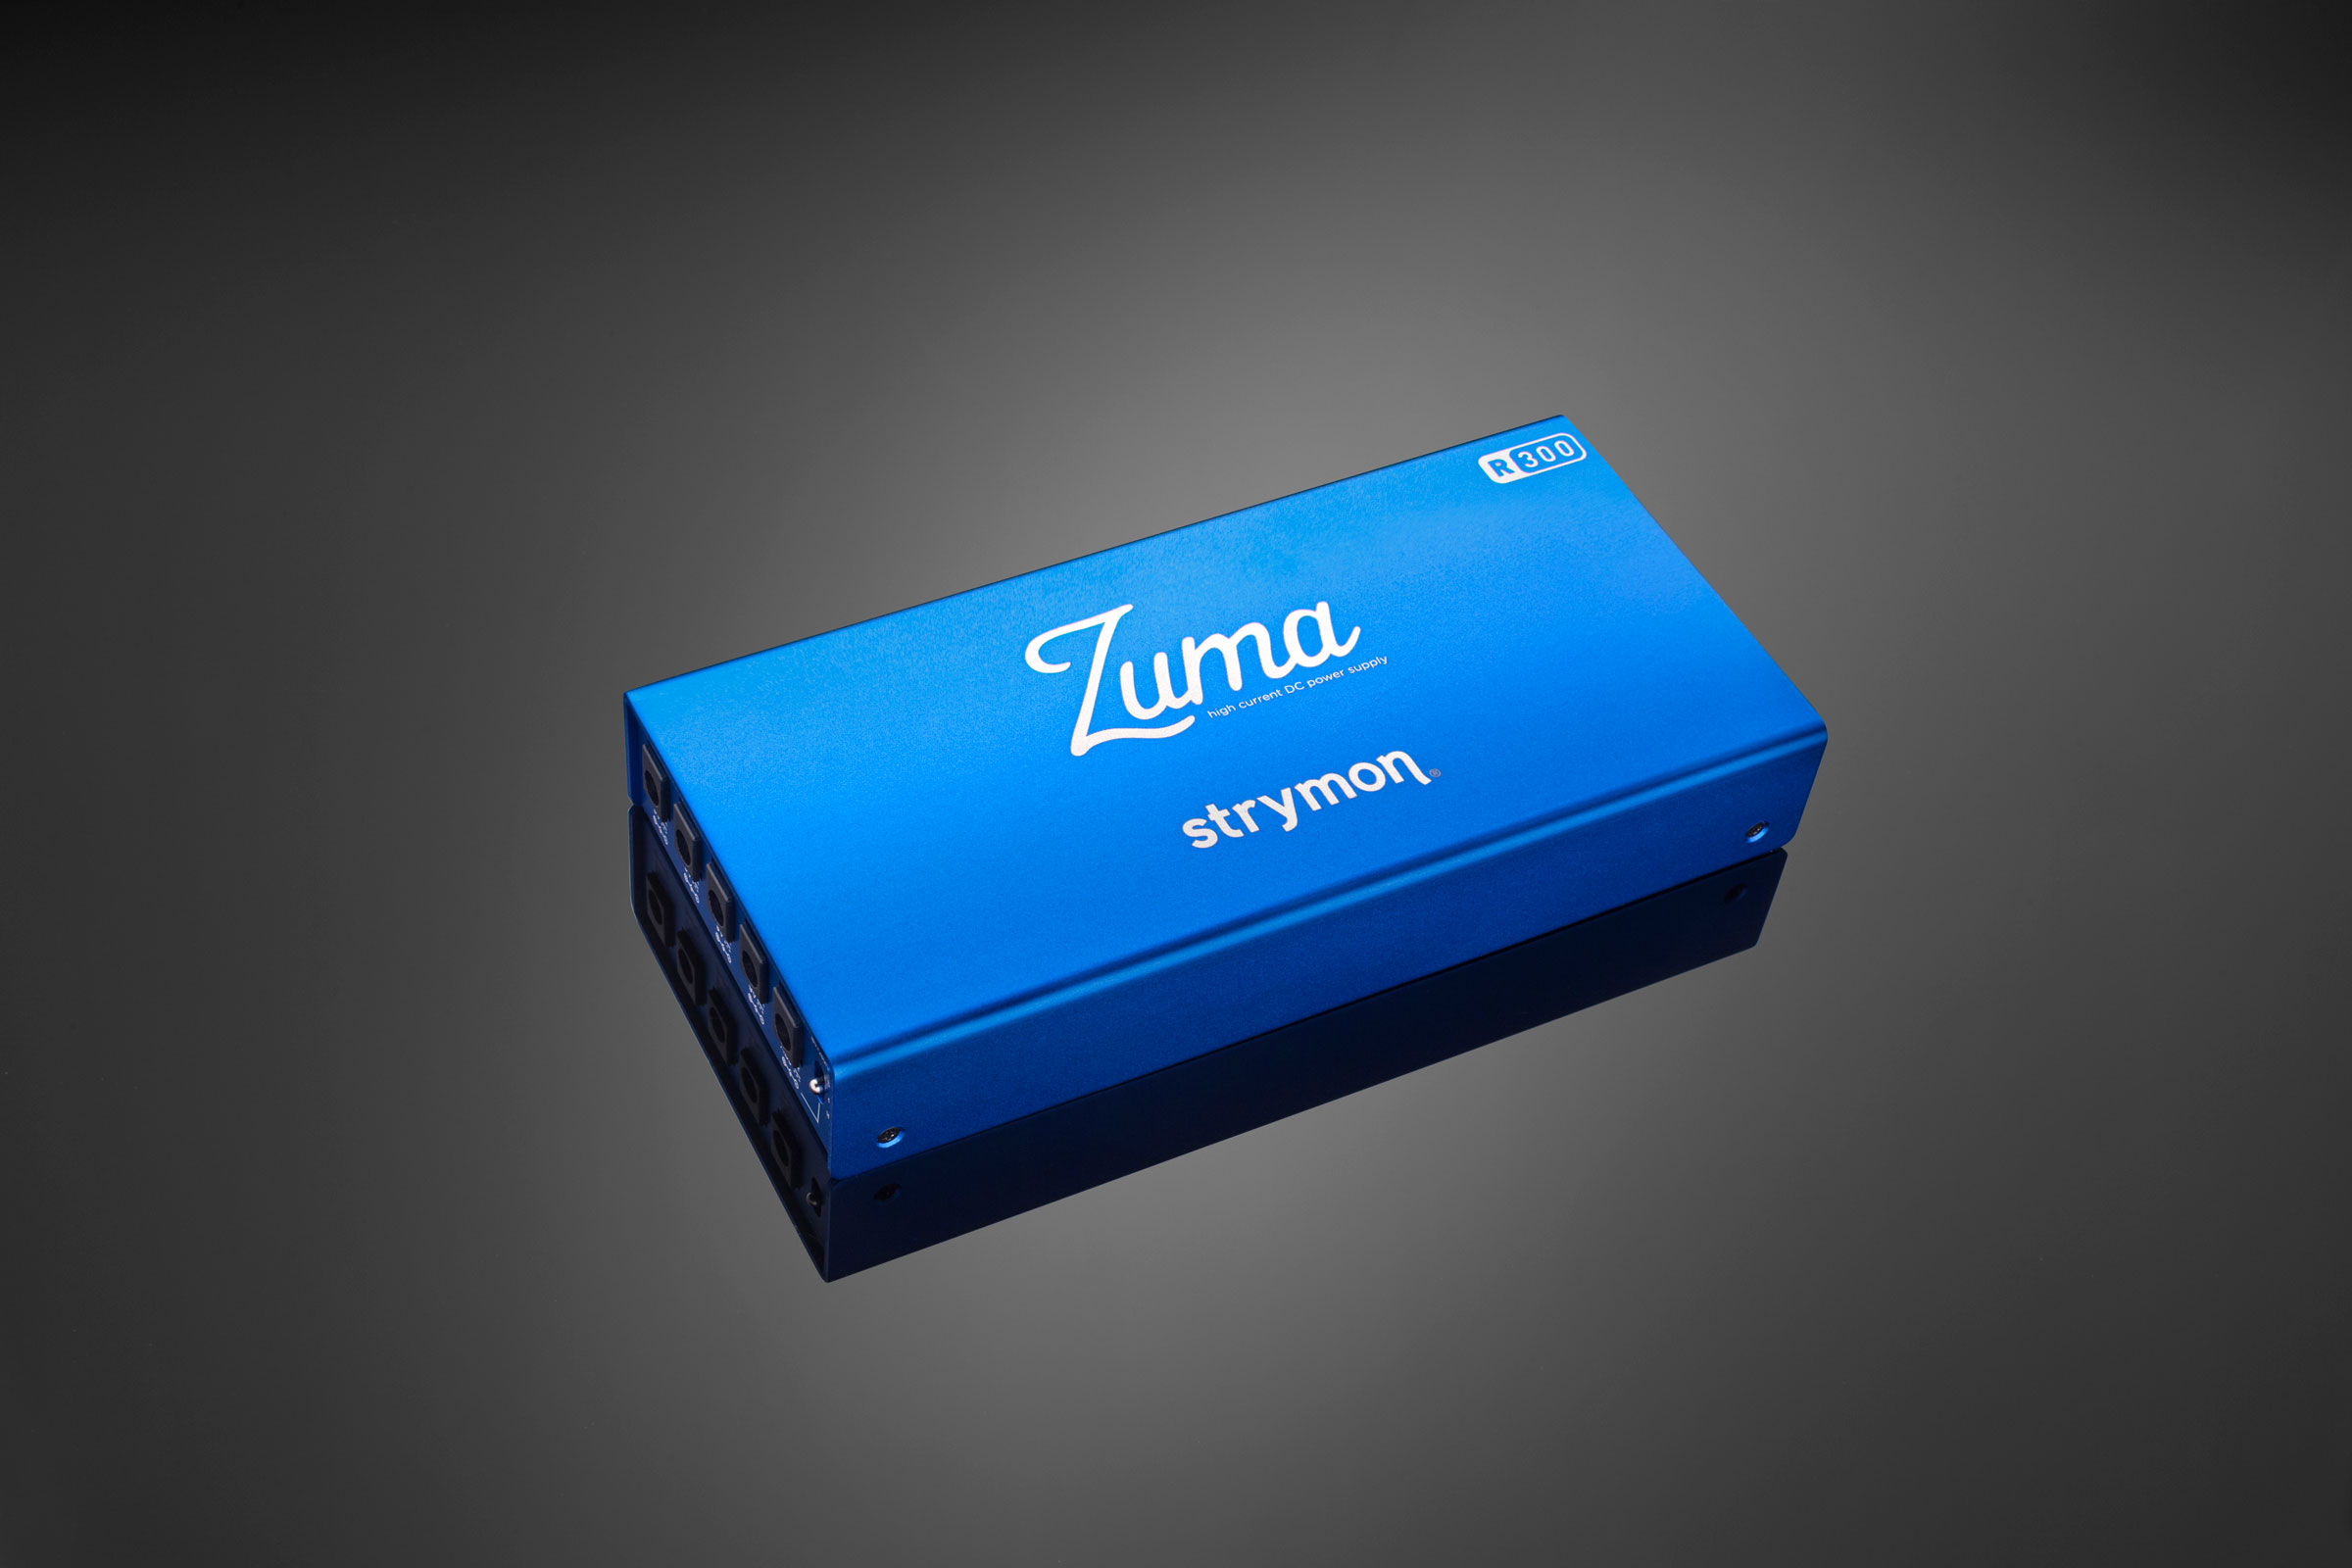 strymon | Zuma R300 | ハイ・パワーサプライ・ユニット | 製品情報